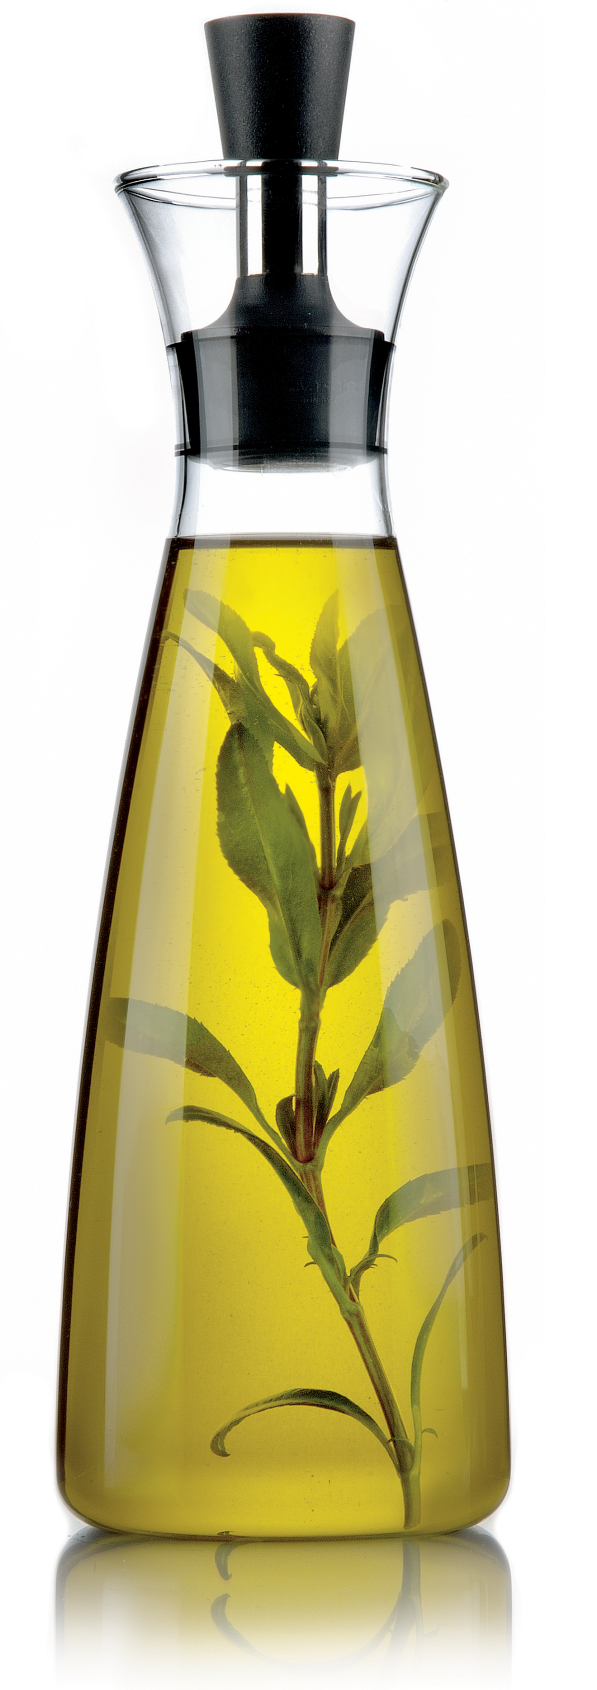 EVA SOLO 0,5 l - butelka na oliwę i ocet z dozownikiem szklana